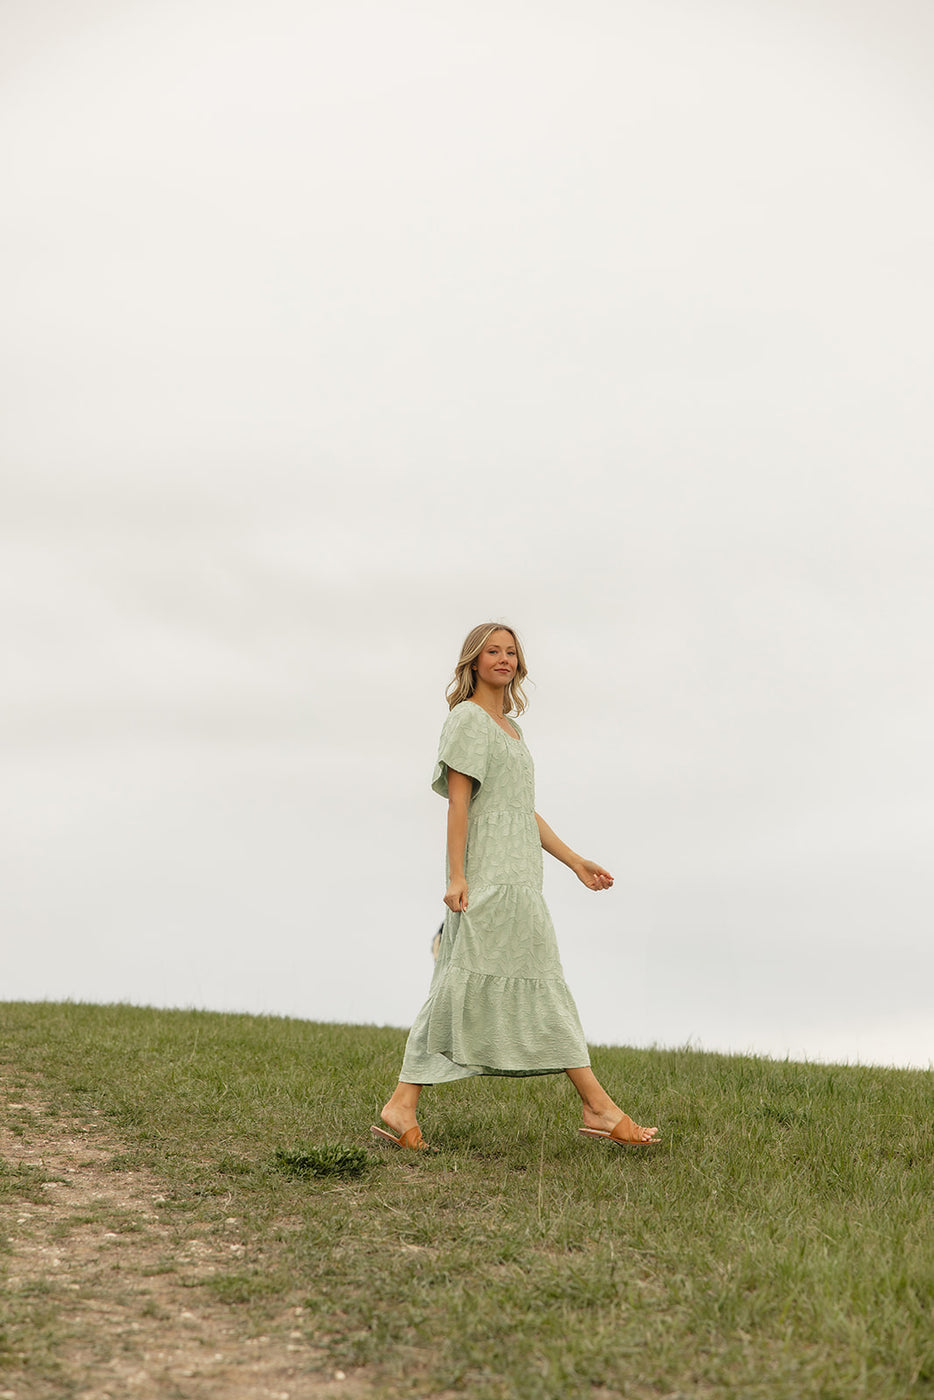 a woman in a dress walking on a grassy hill